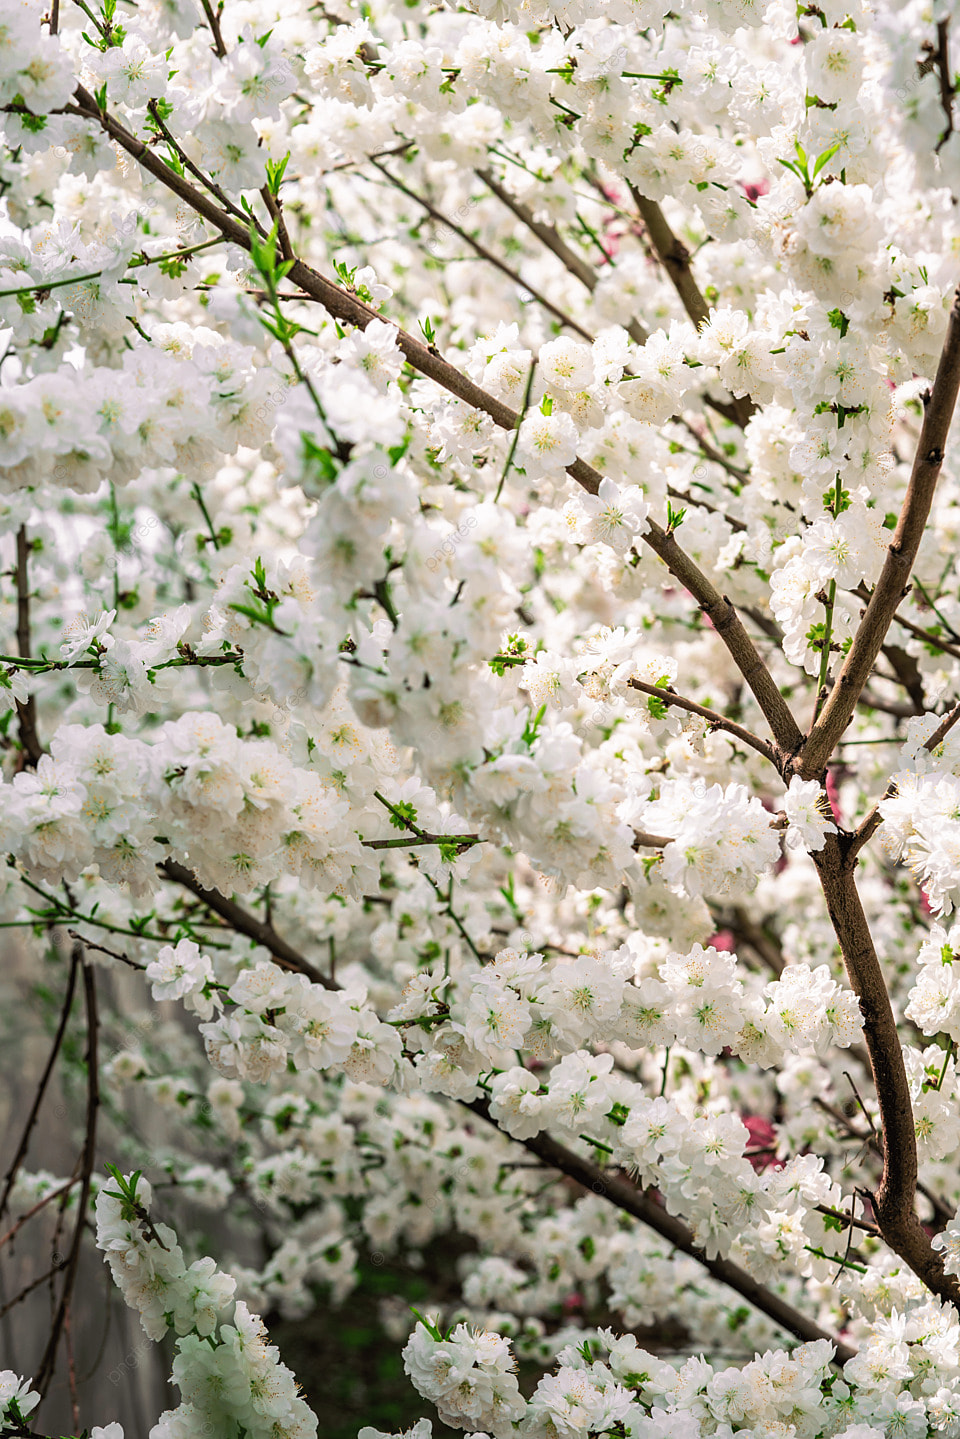 pngtree-cherry-blossom-spring-white-cherry-blossom-tree-garden-cherry-blossom-viewing-image_848304.jpg